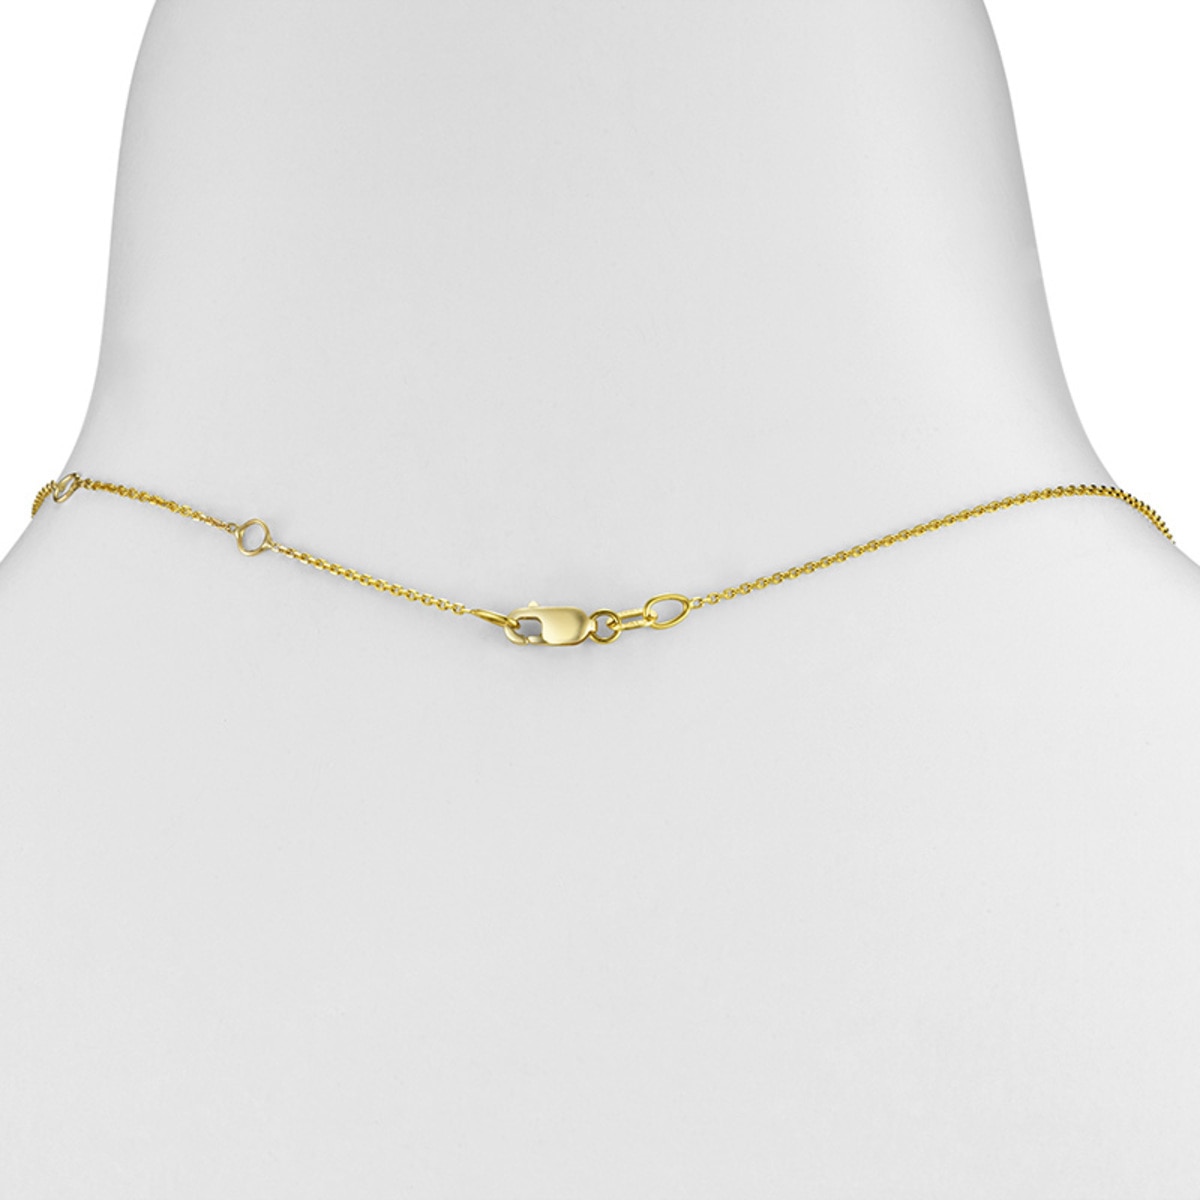 Collar de Perla, 10.5-11mm, Oro Amarillo de 14kt